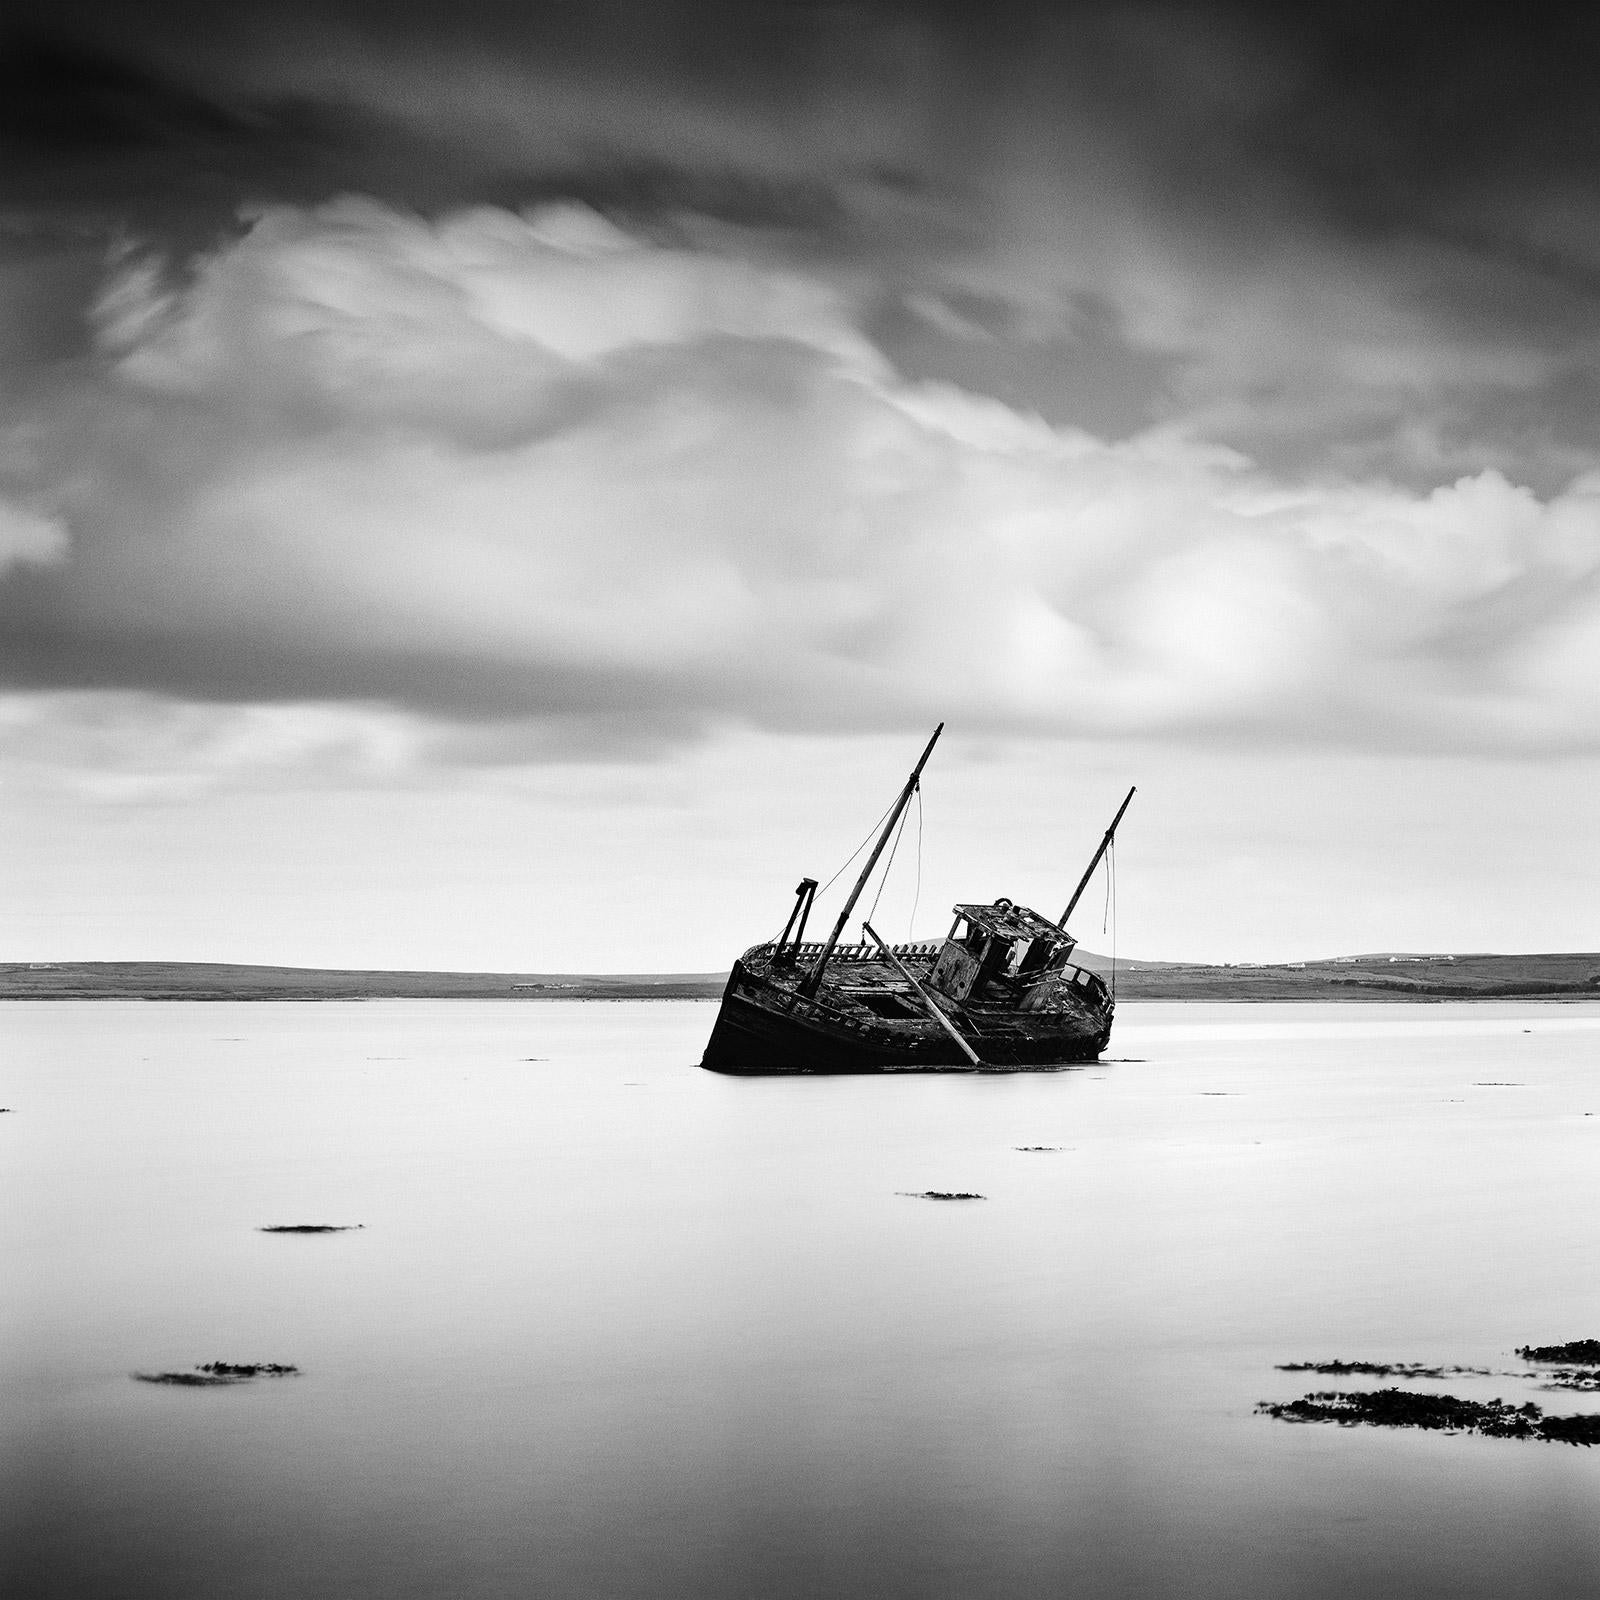 Stranded fishing Boat, beach, Ireland, black and white photography, landscape